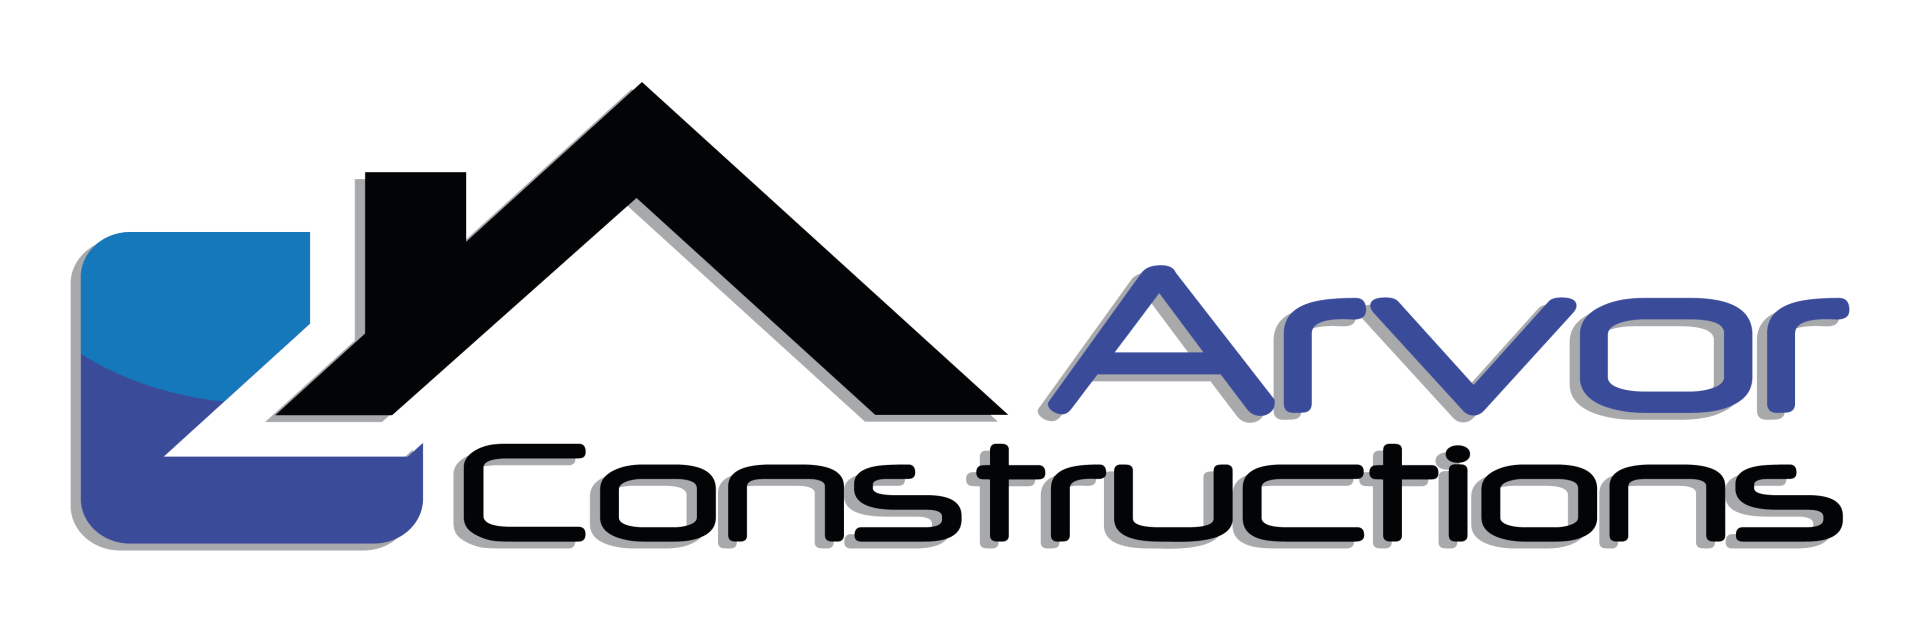 arvor constructions - logo